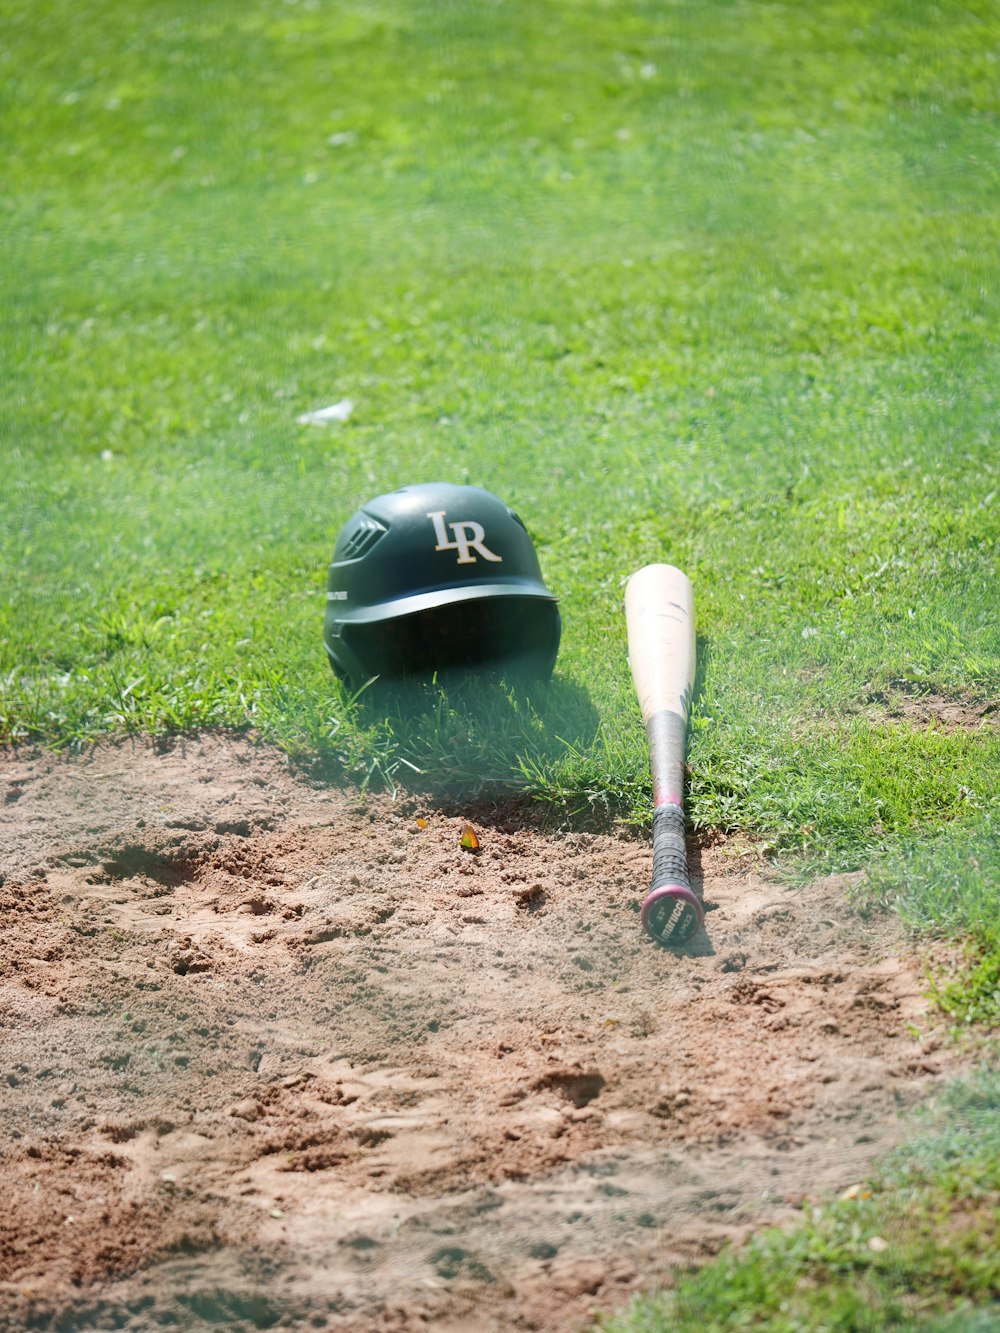 a baseball bat and a helmet on a field